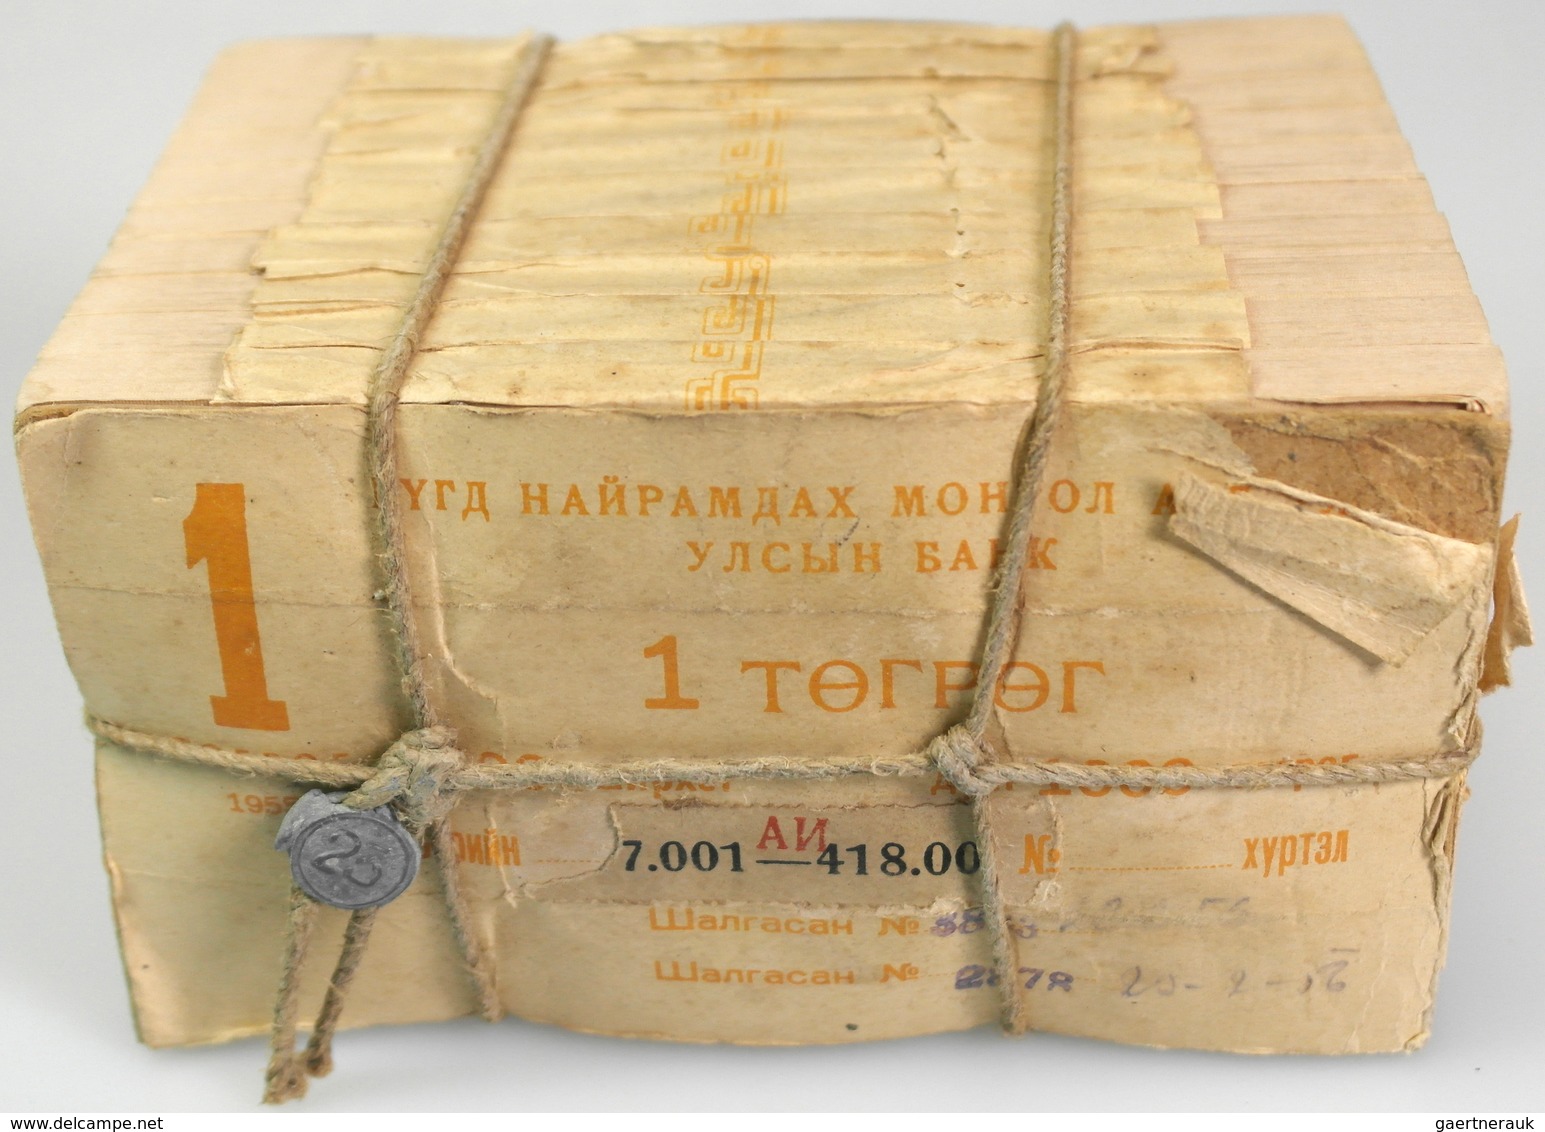 02825 Mongolia / Mongolei: Original Brick With 1000 Banknotes 1 Tugrik 1955, P.28, Packed In 10 Bundles Of - Mongolia